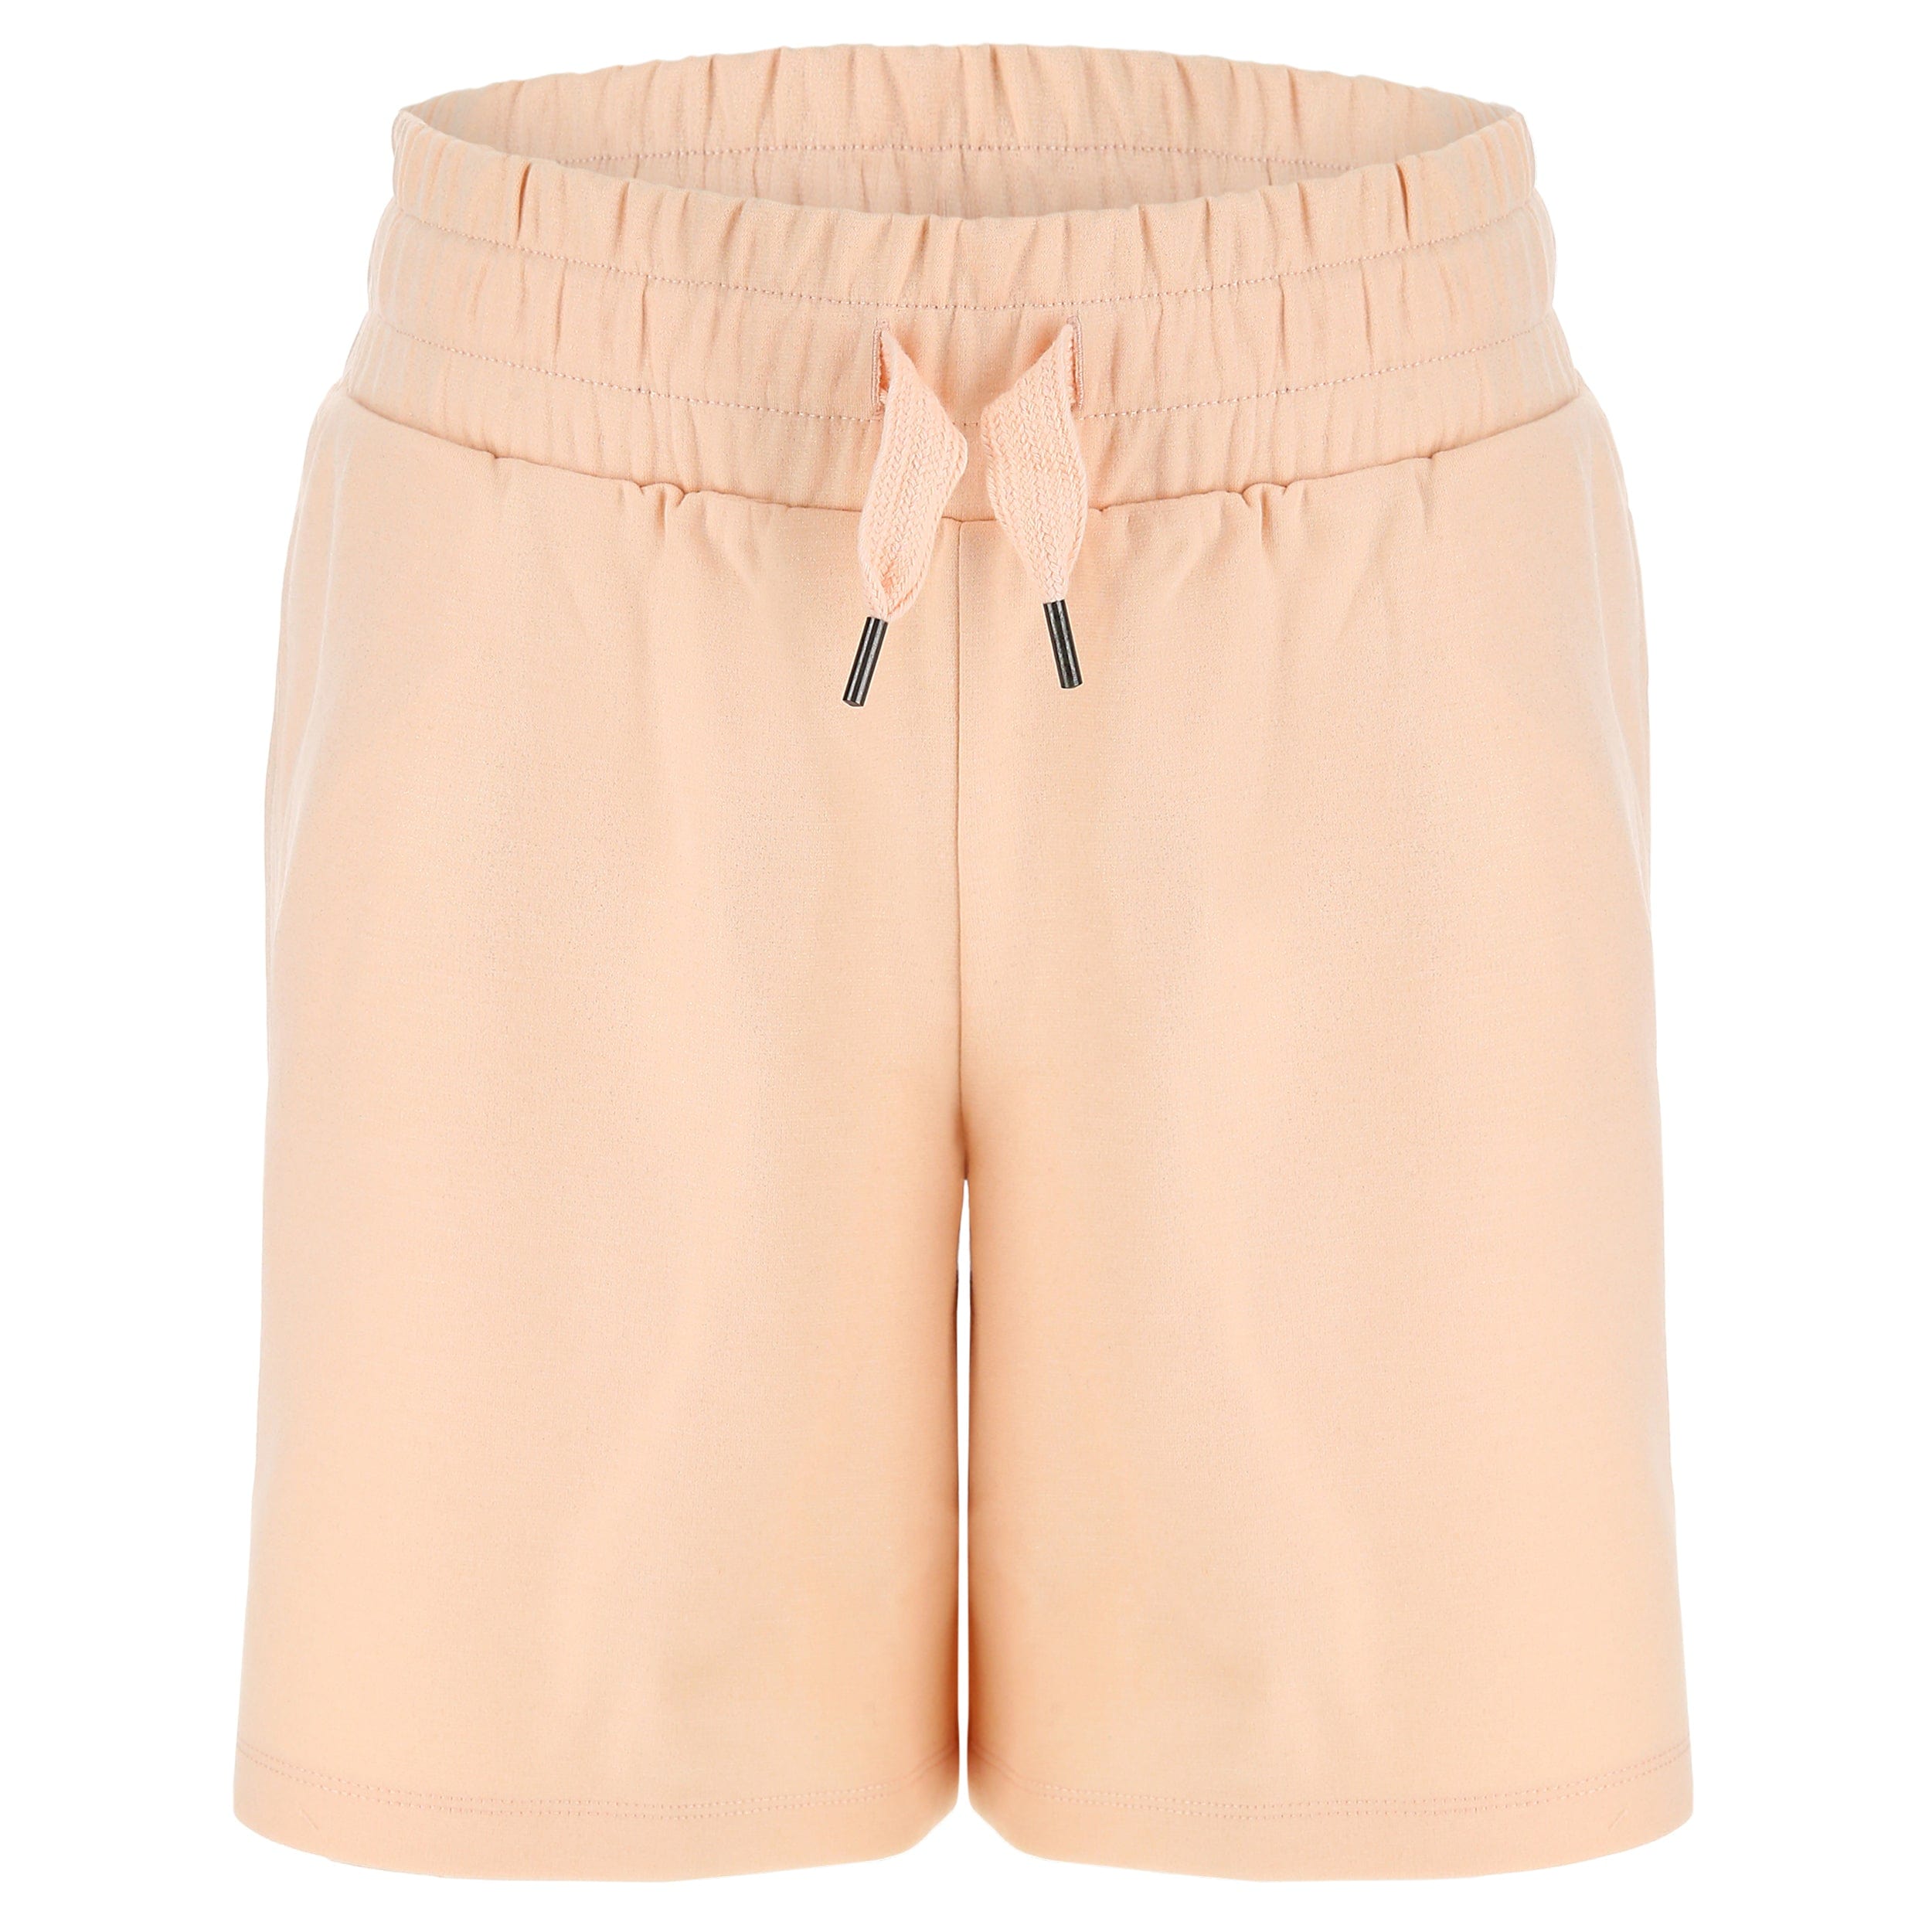 Bermuda shorts - Beige 2